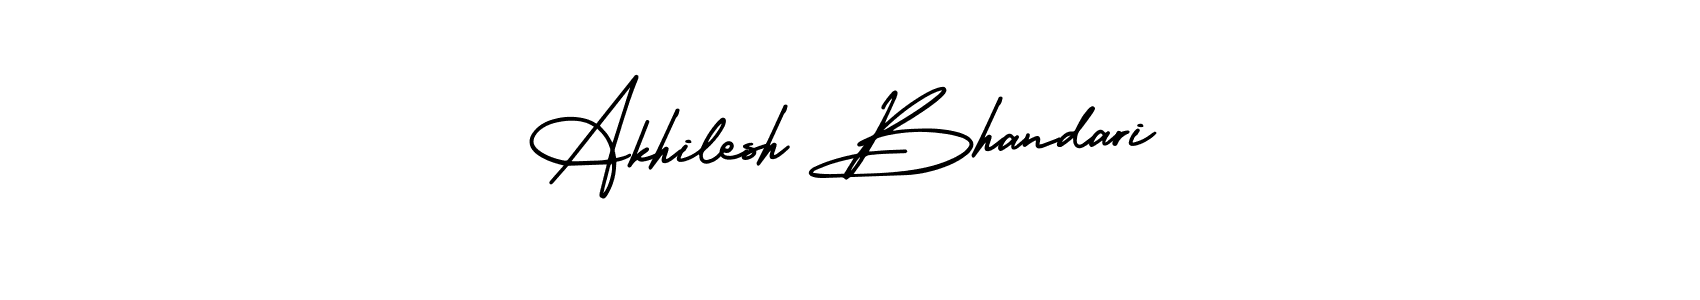 How to Draw Akhilesh Bhandari signature style? AmerikaSignatureDemo-Regular is a latest design signature styles for name Akhilesh Bhandari. Akhilesh Bhandari signature style 3 images and pictures png